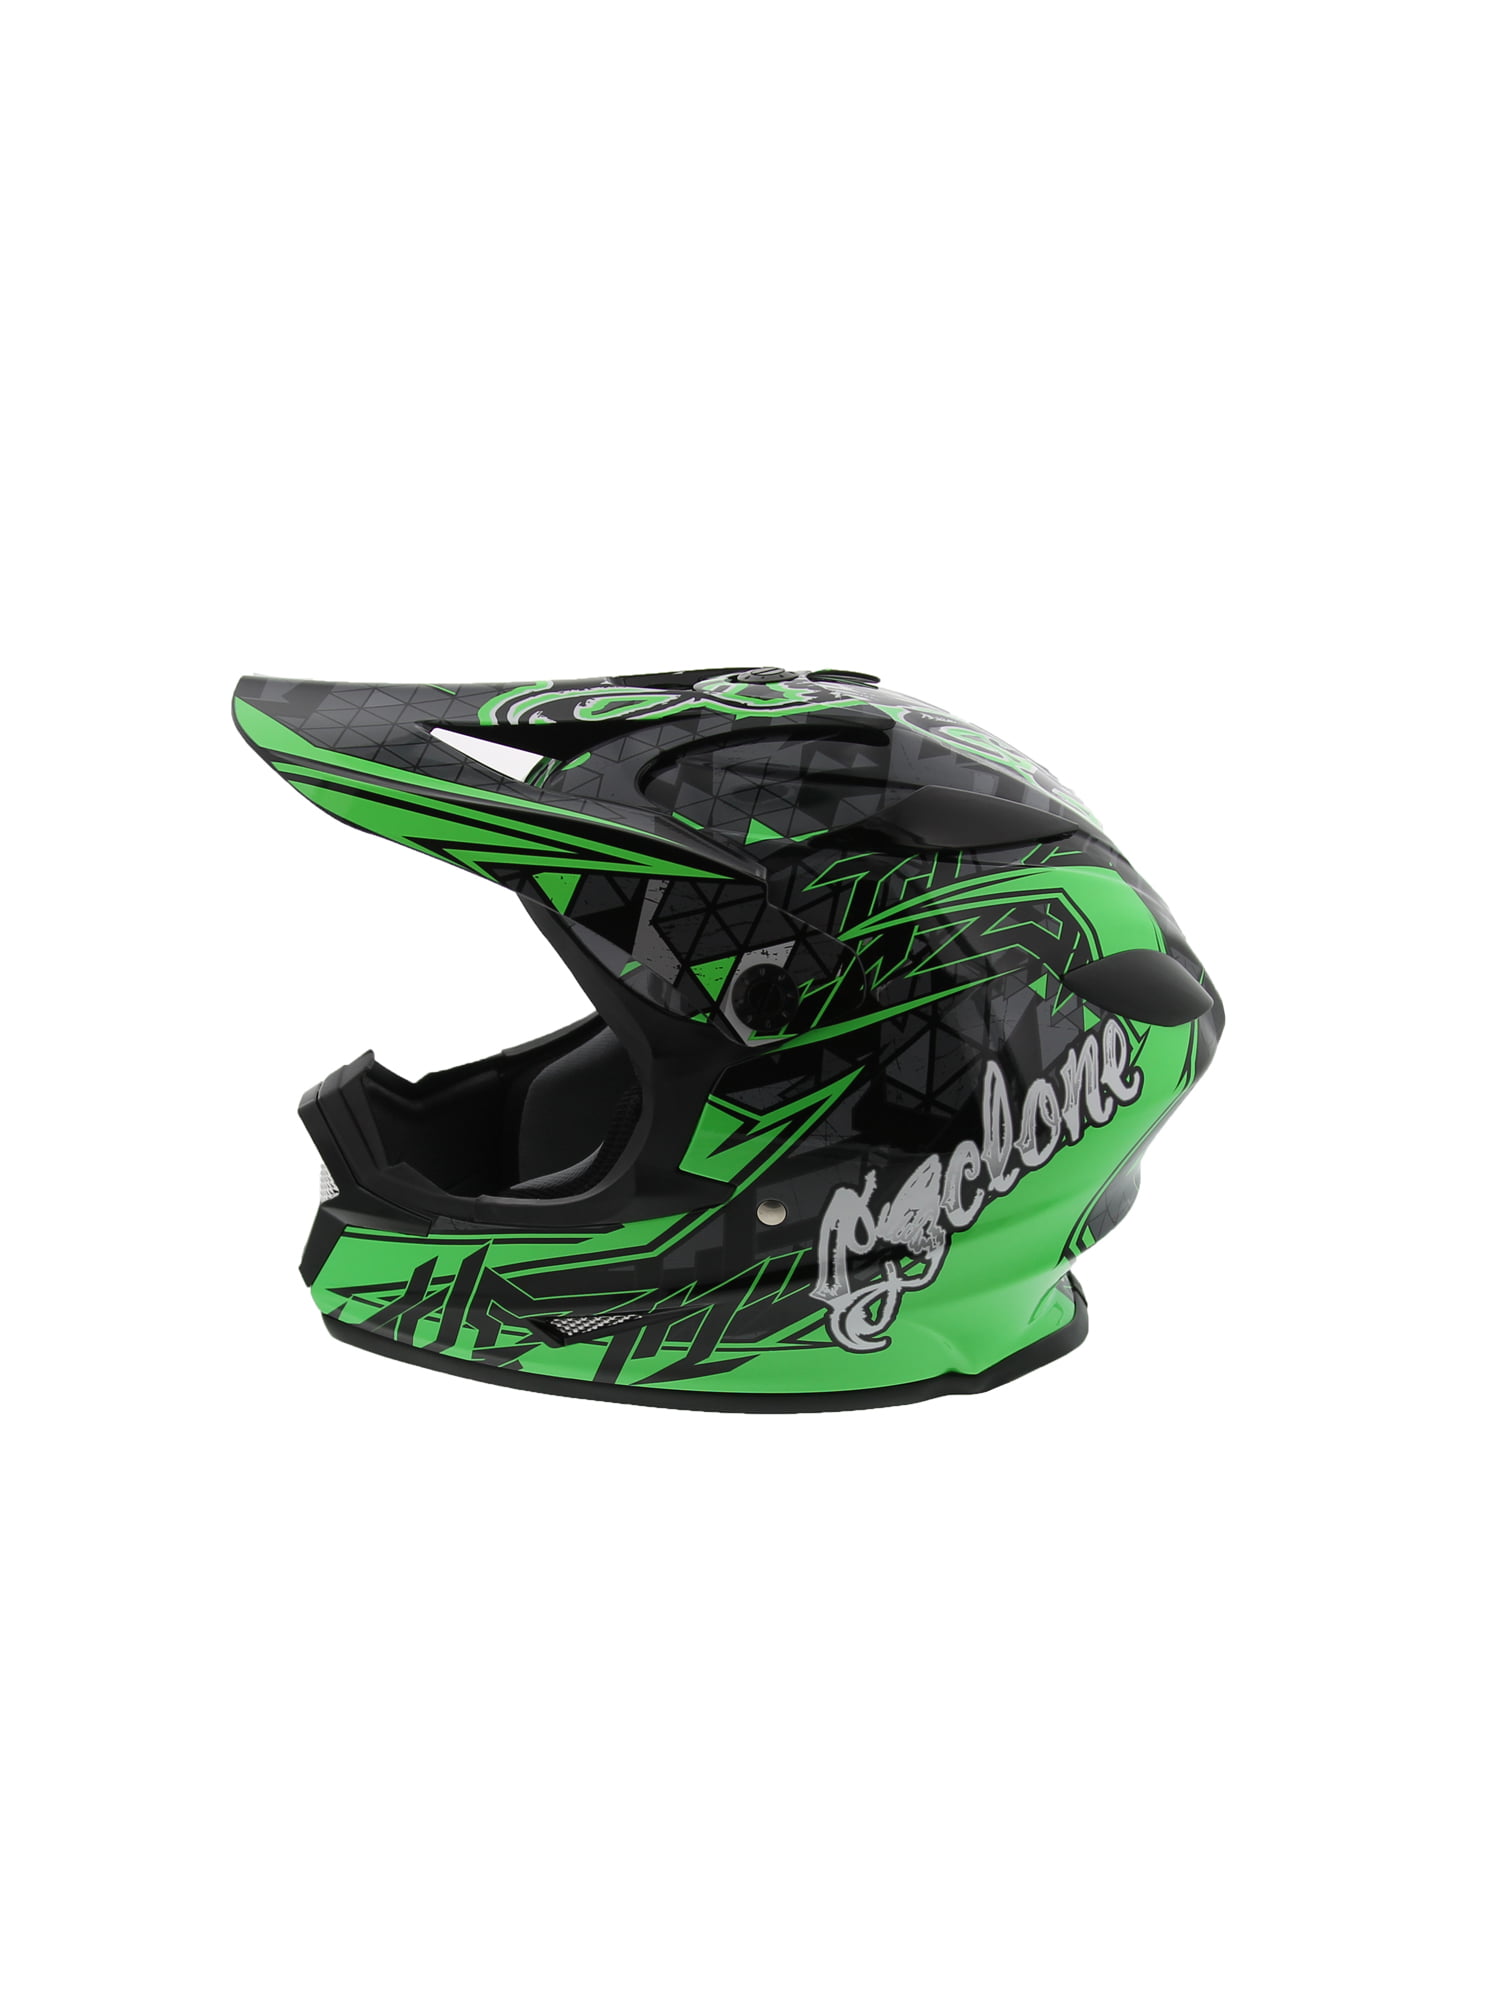 New Black Off Road Quad Motocross Motorbike Motorcycle Helmet MX Visor ECE Sport 